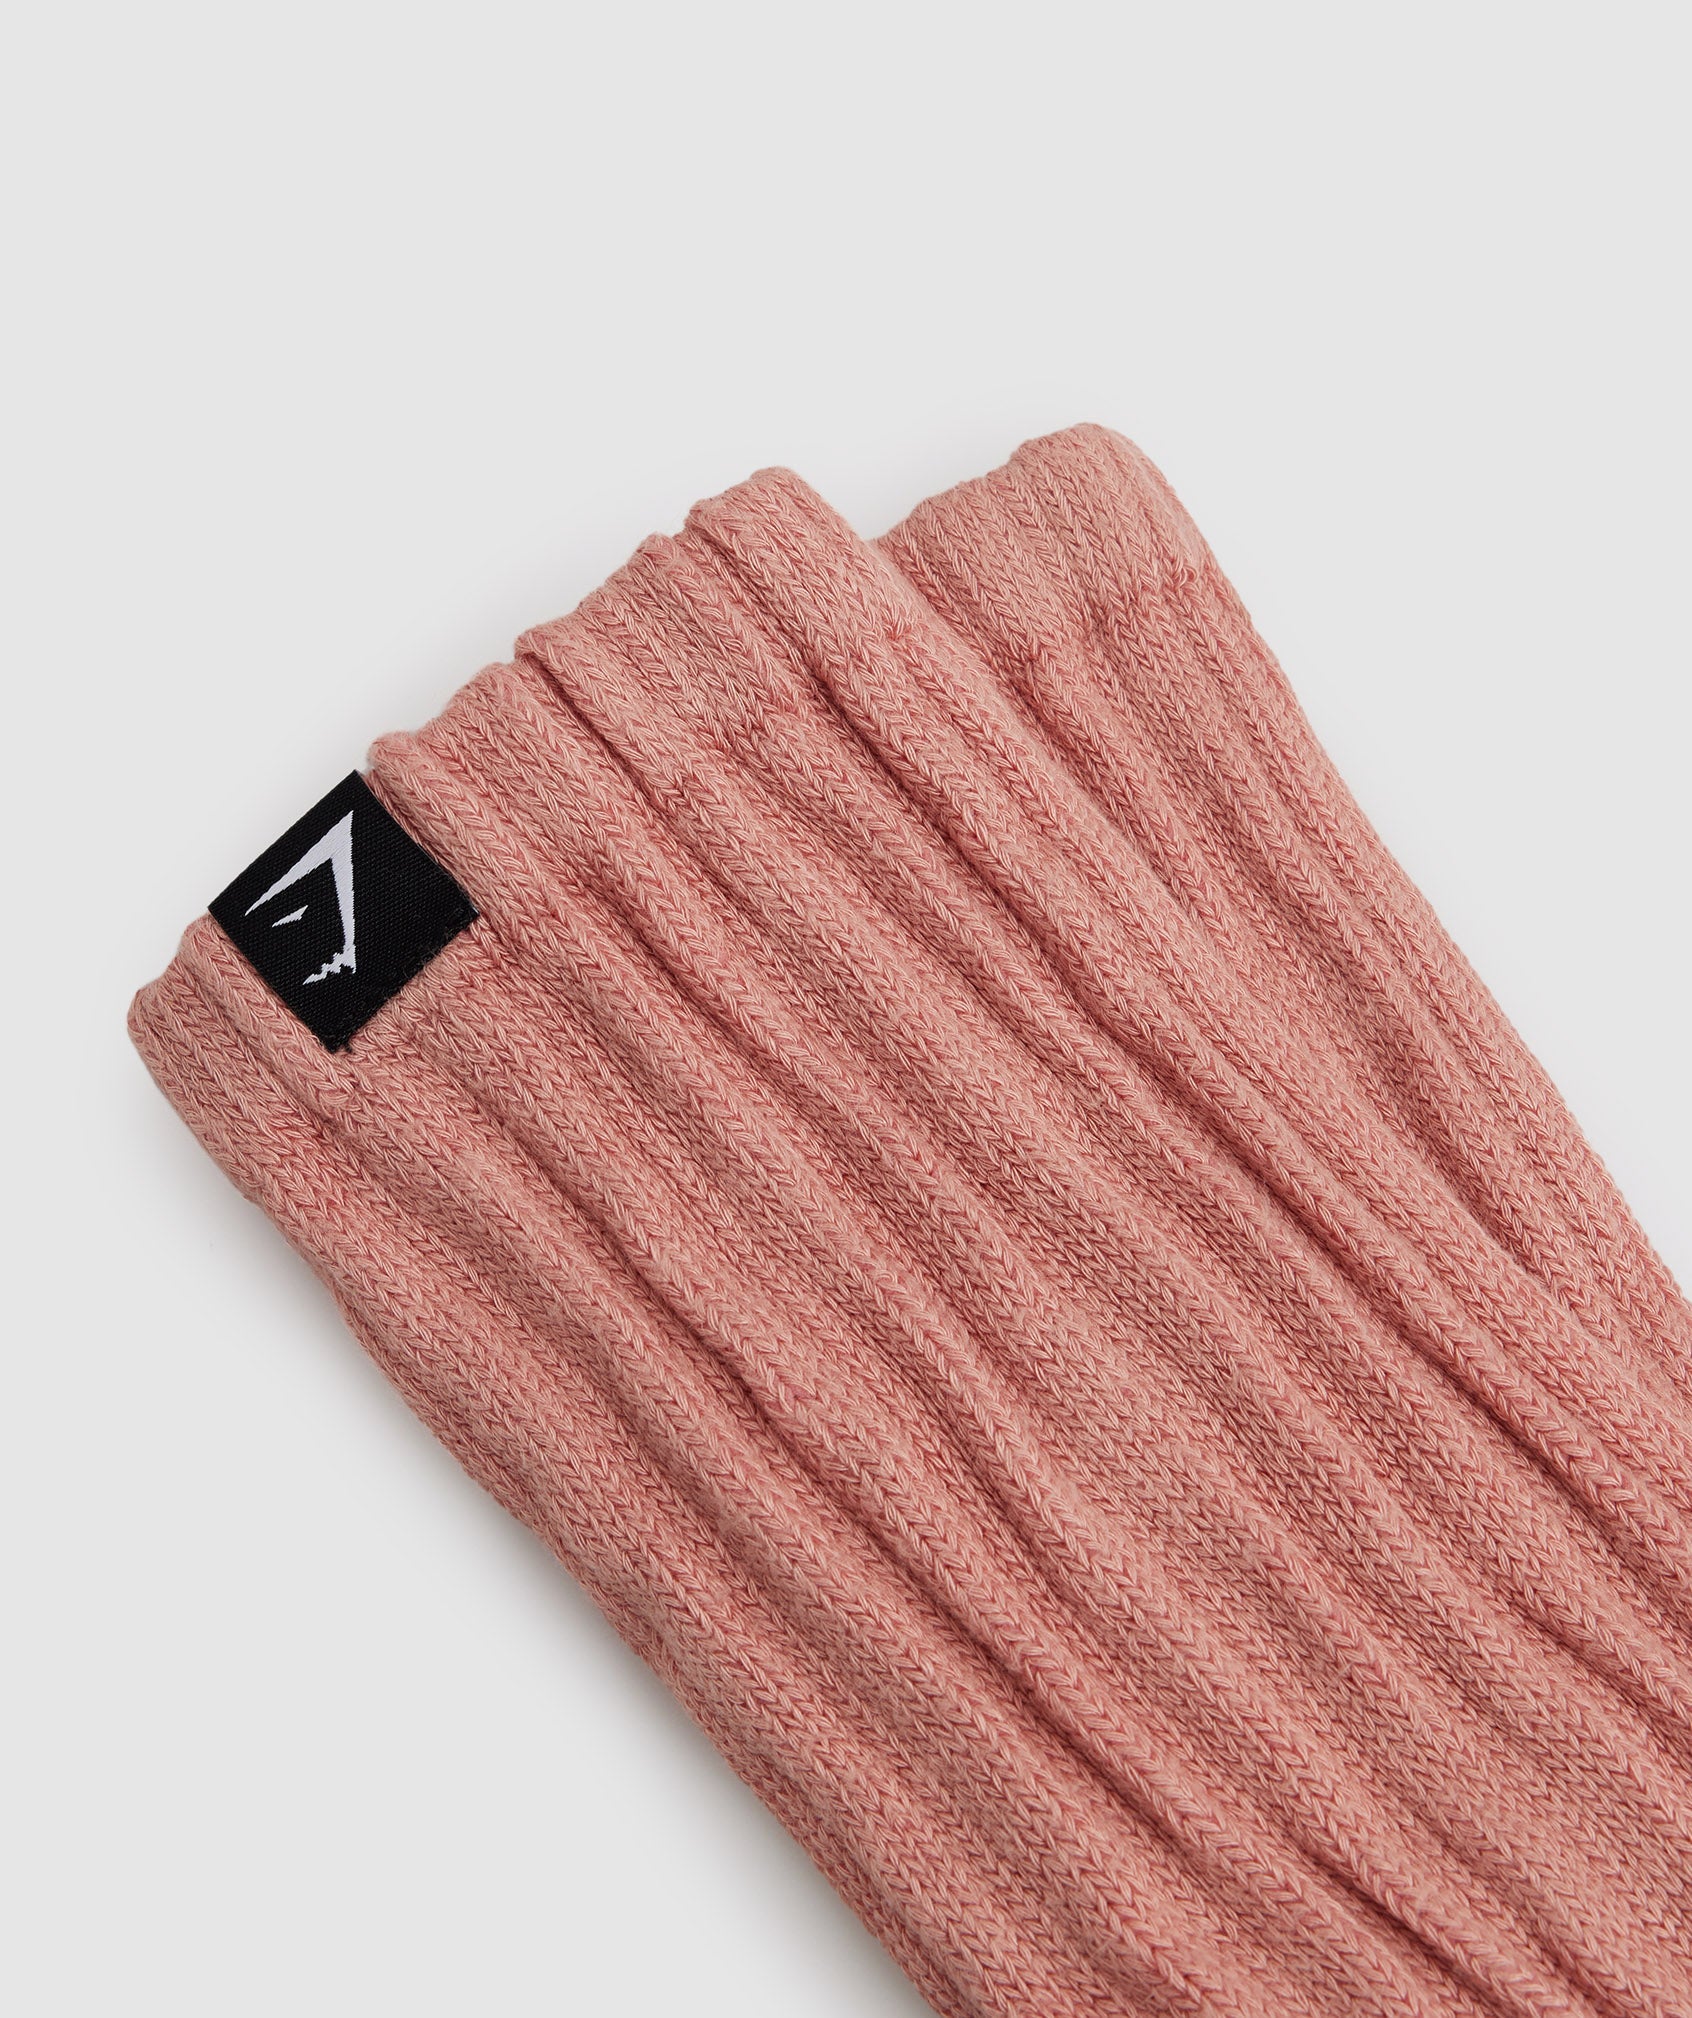 Comfy Rest Day Socks in Hazy Pink